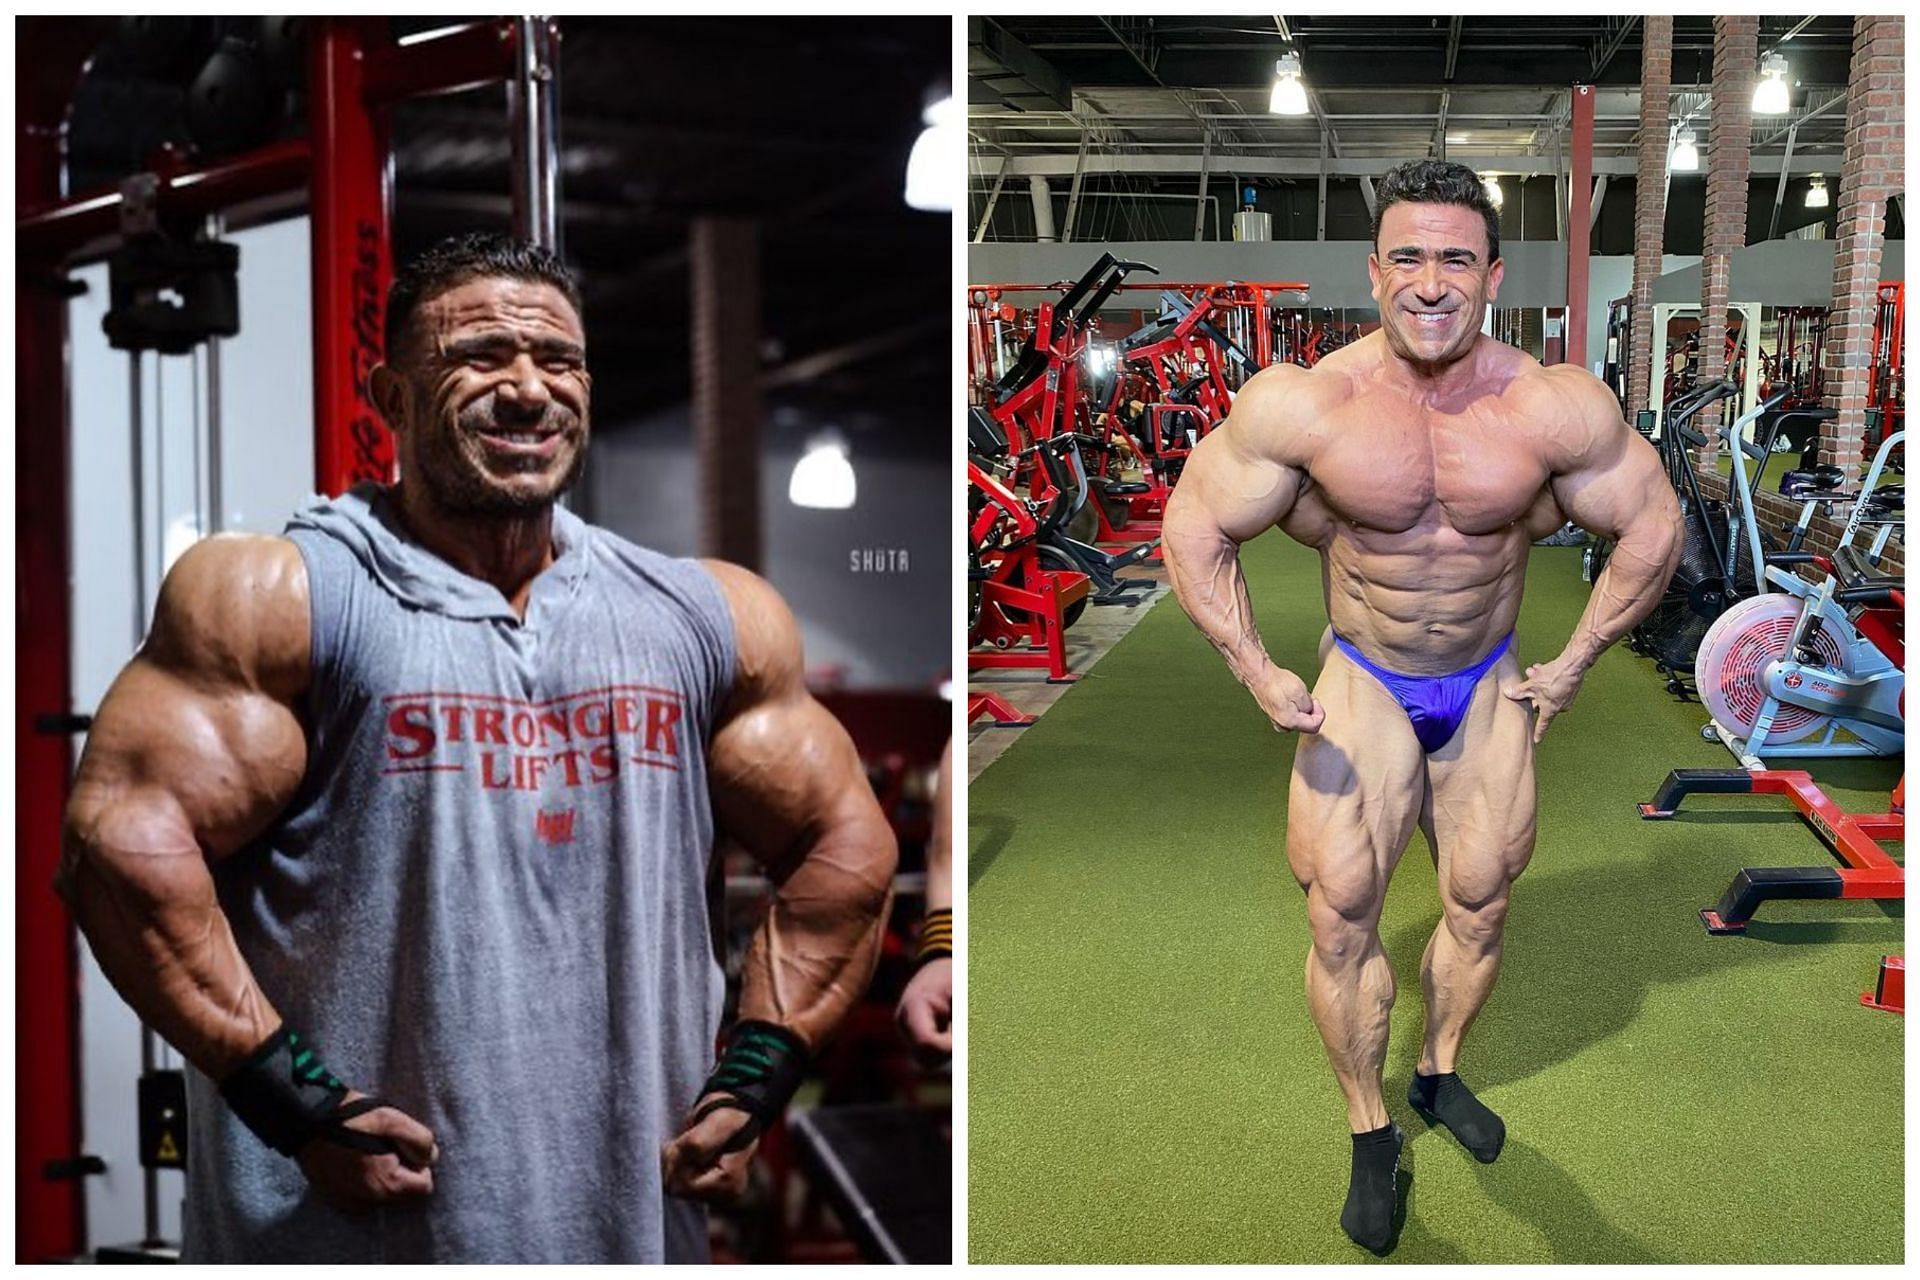 Libyan pro bodybuilder Kamal El-Gargini shows off massive physique: Image via Instagram (@ifbb_pro_kamal_elgargni)